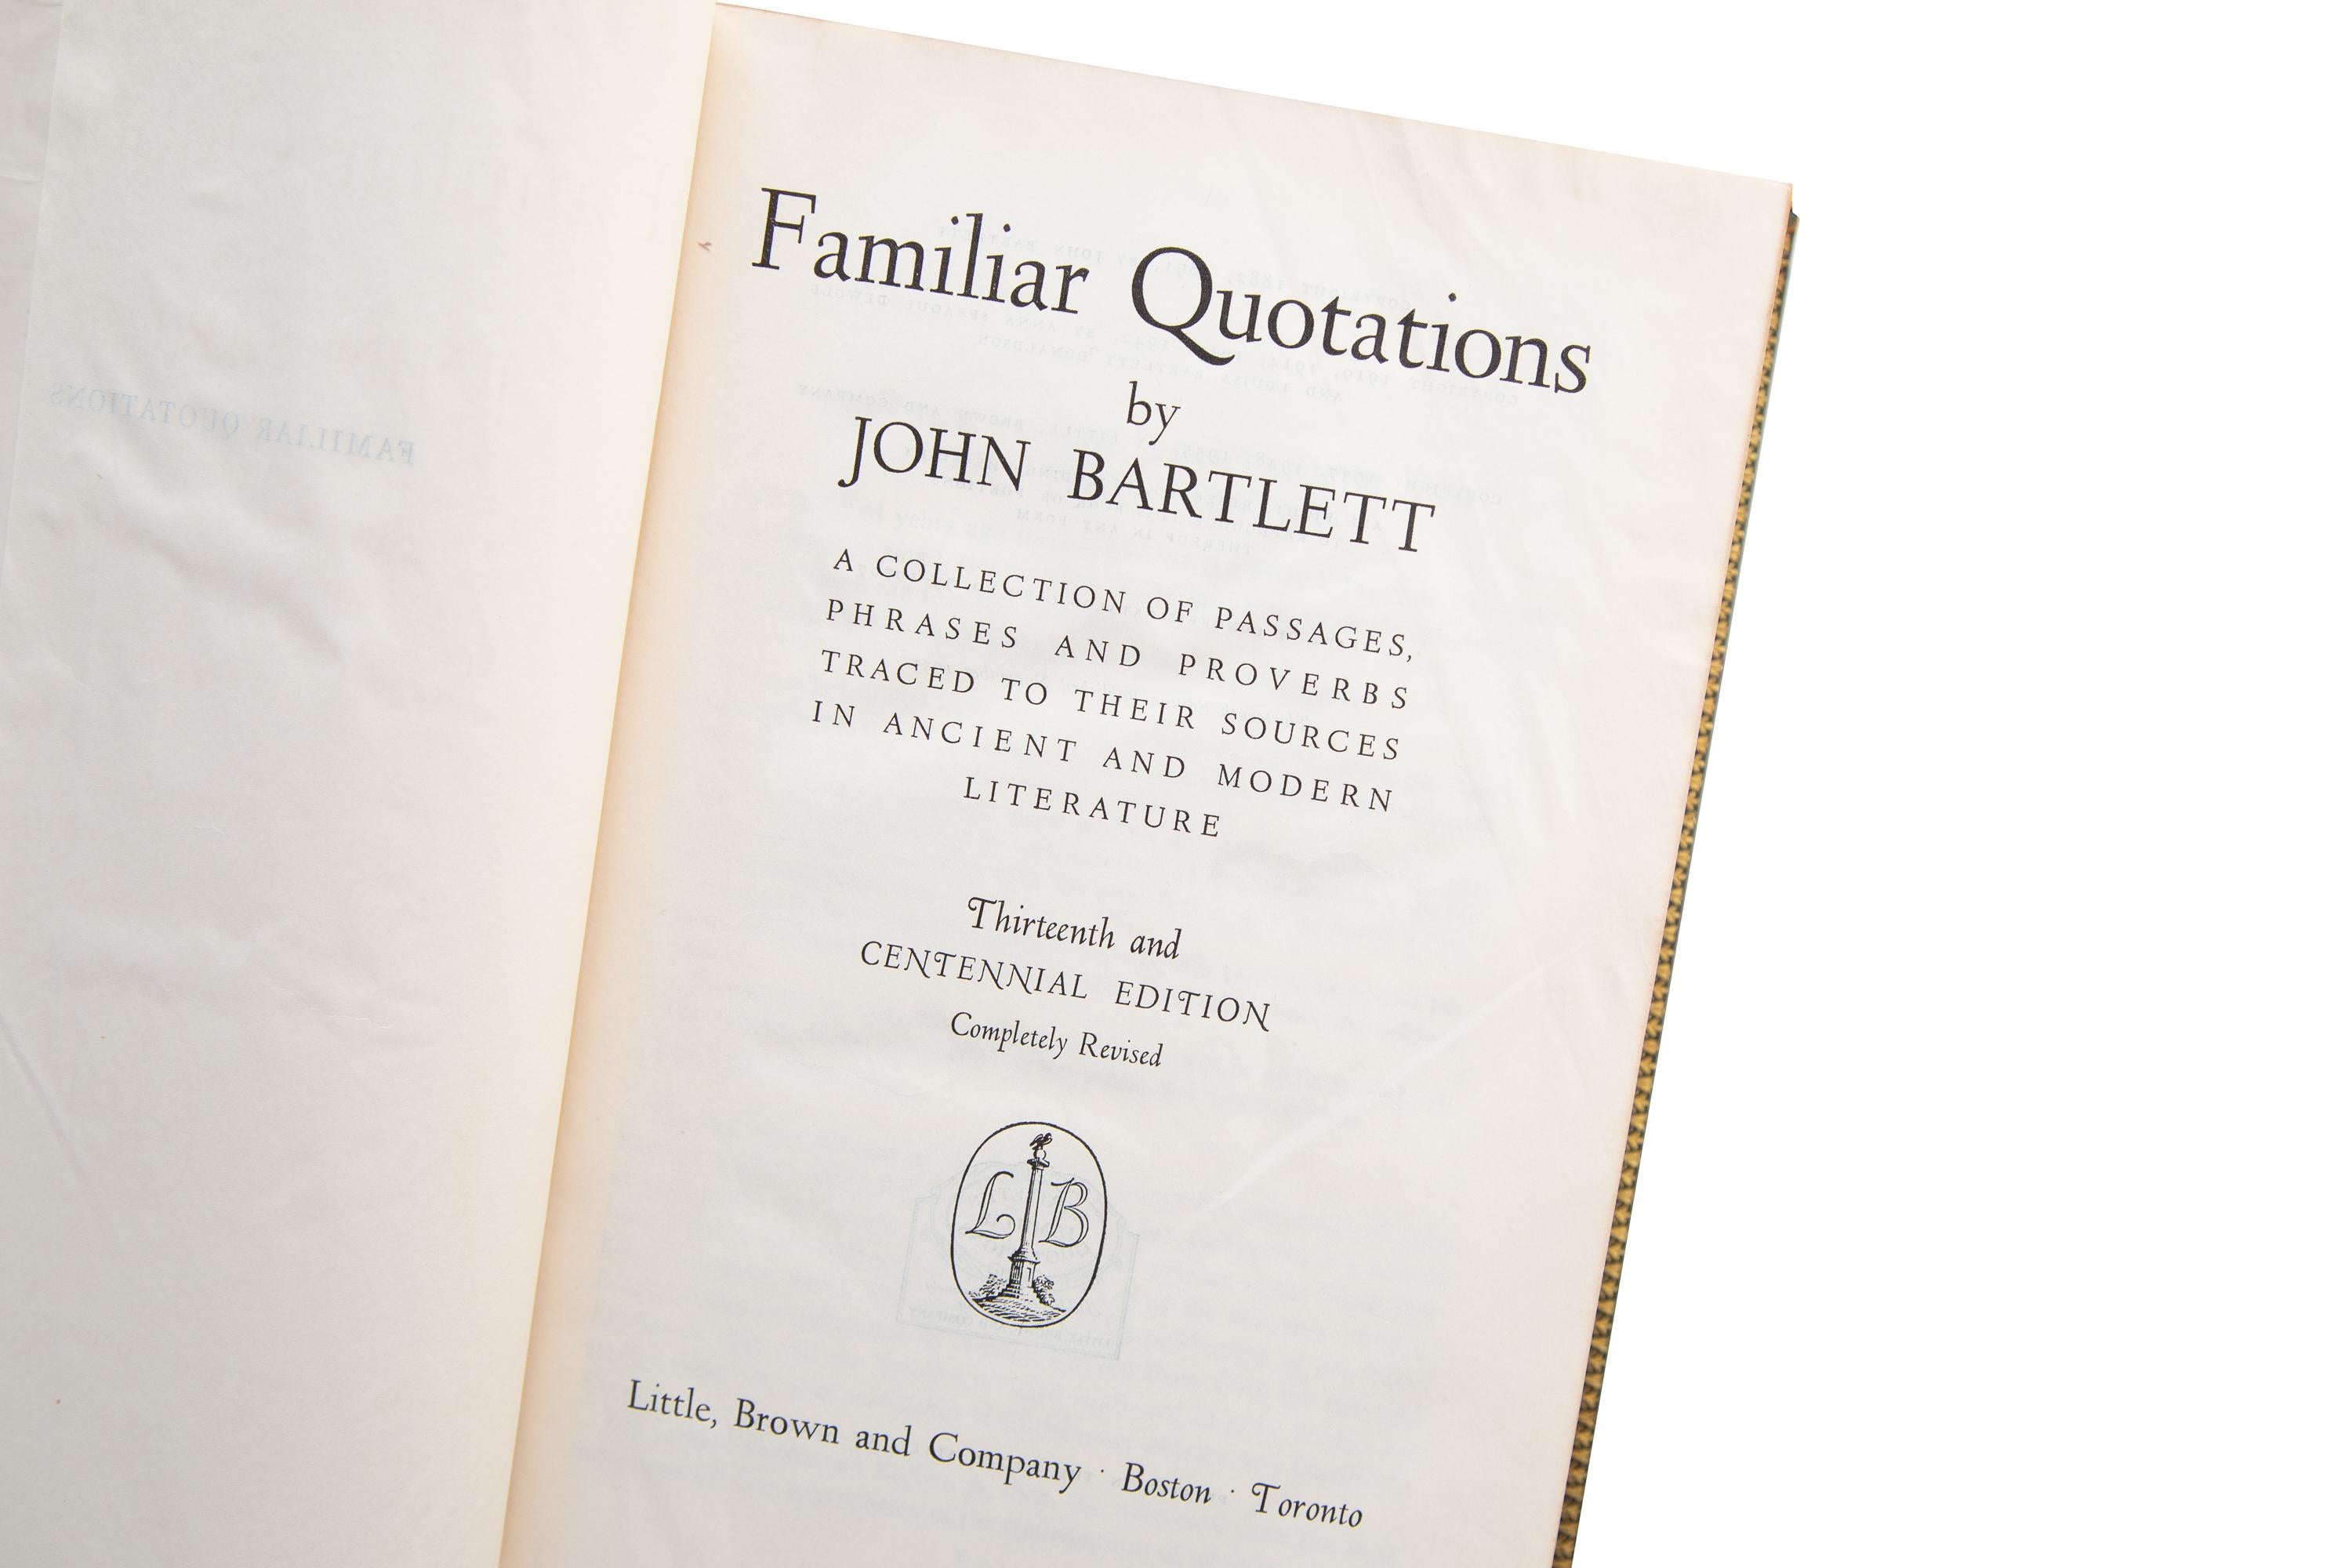 bartlett's familiar quotations